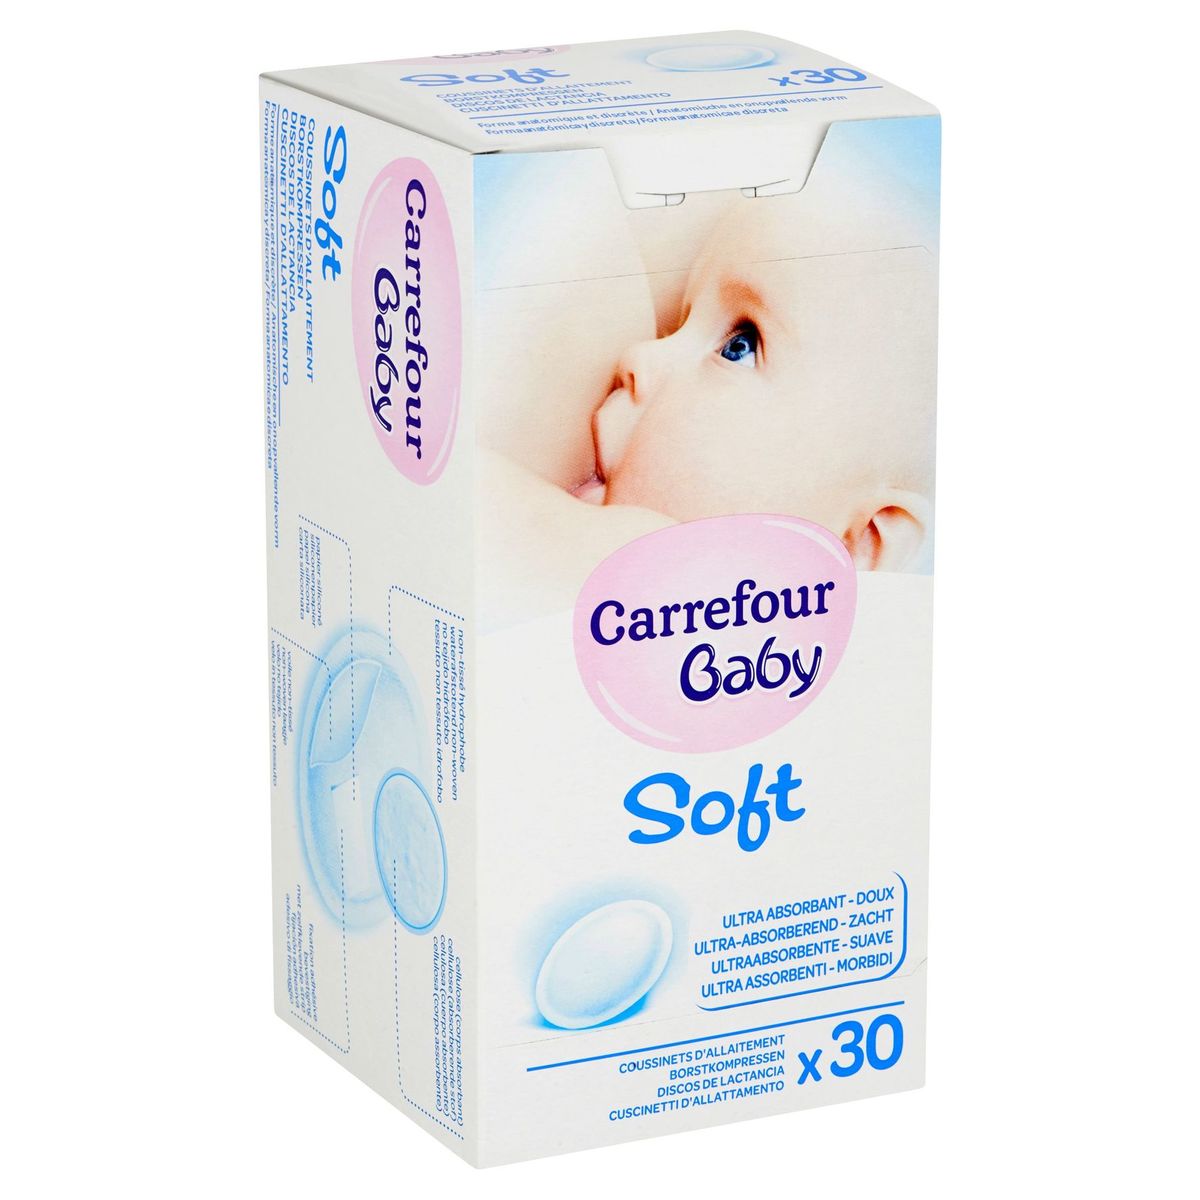 Carrefour Baby Soft Borstkompressen 30 Stuks